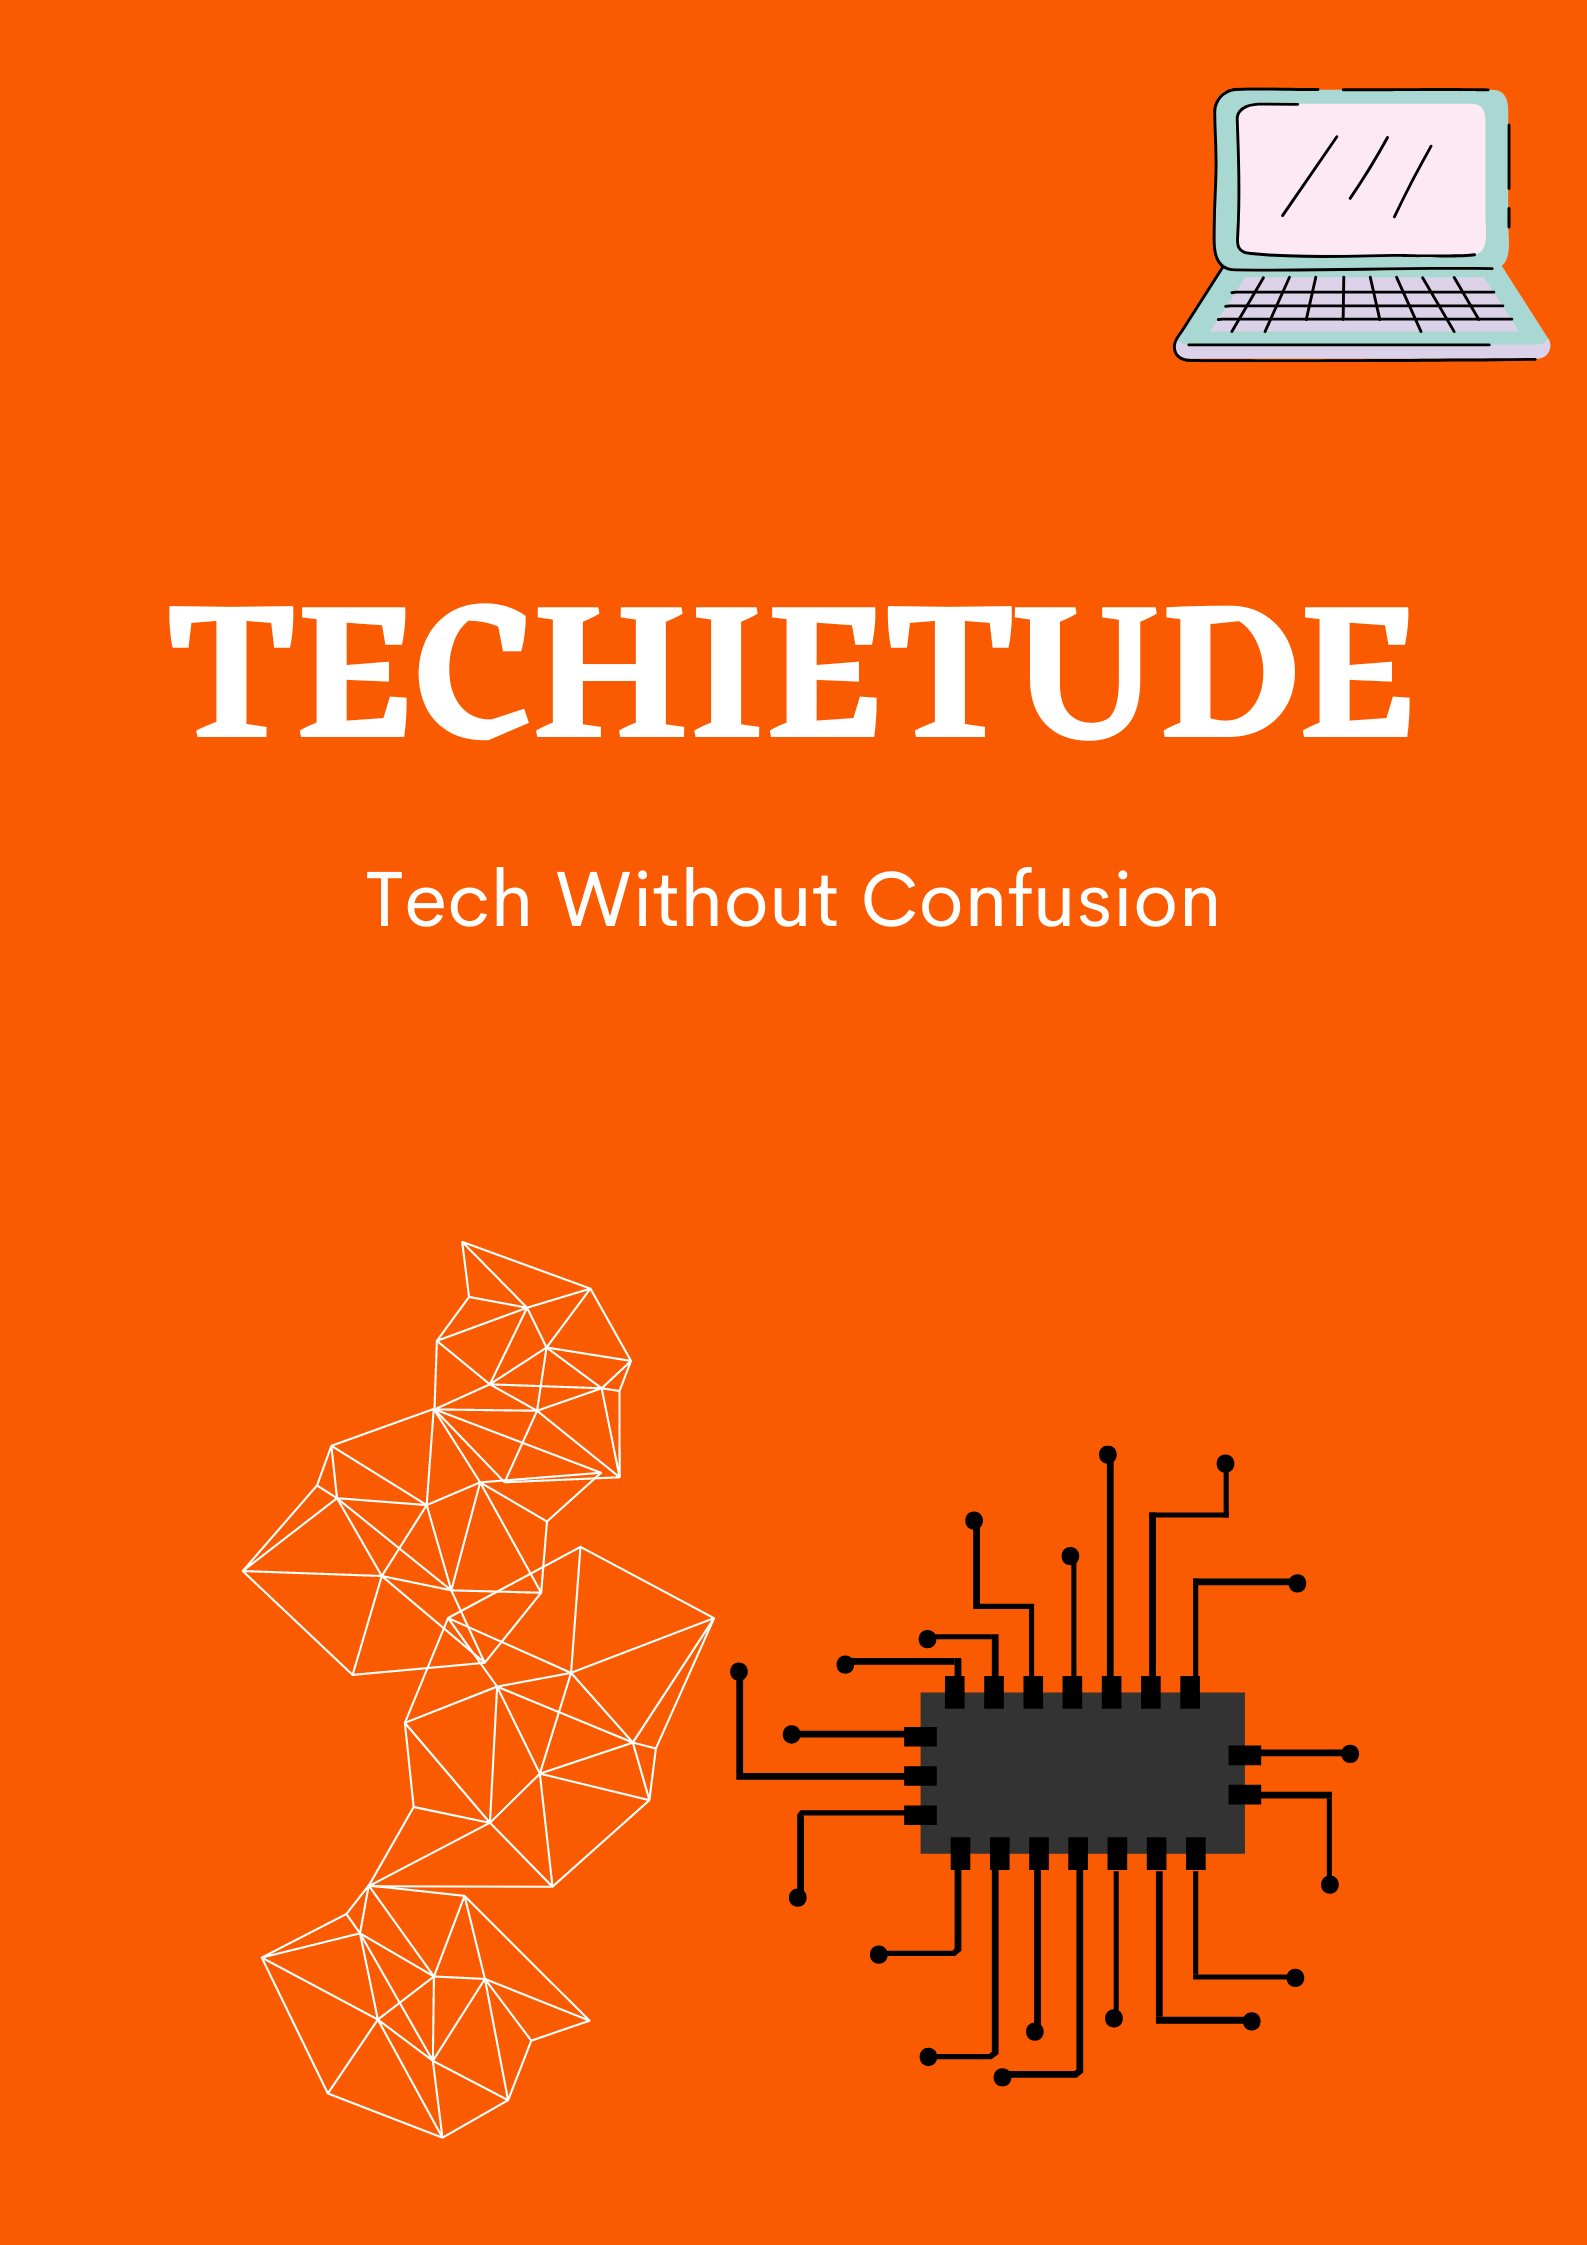 techietude banner